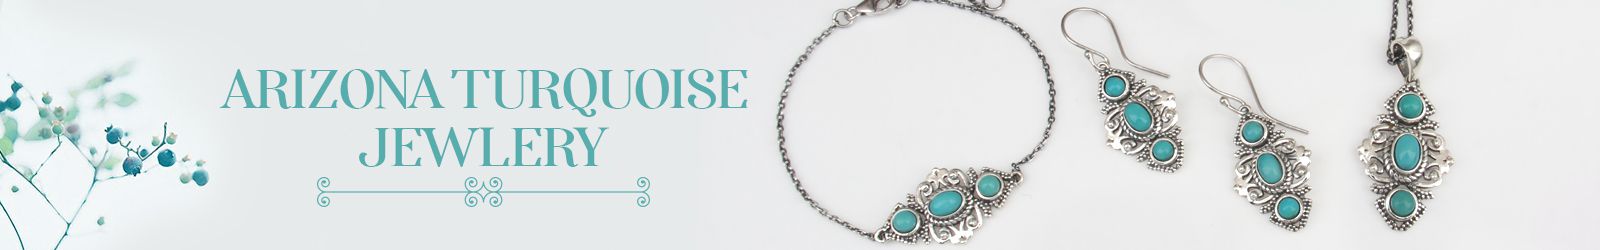 Silver Arizona Turquoise Jewelry Wholesale Supplier